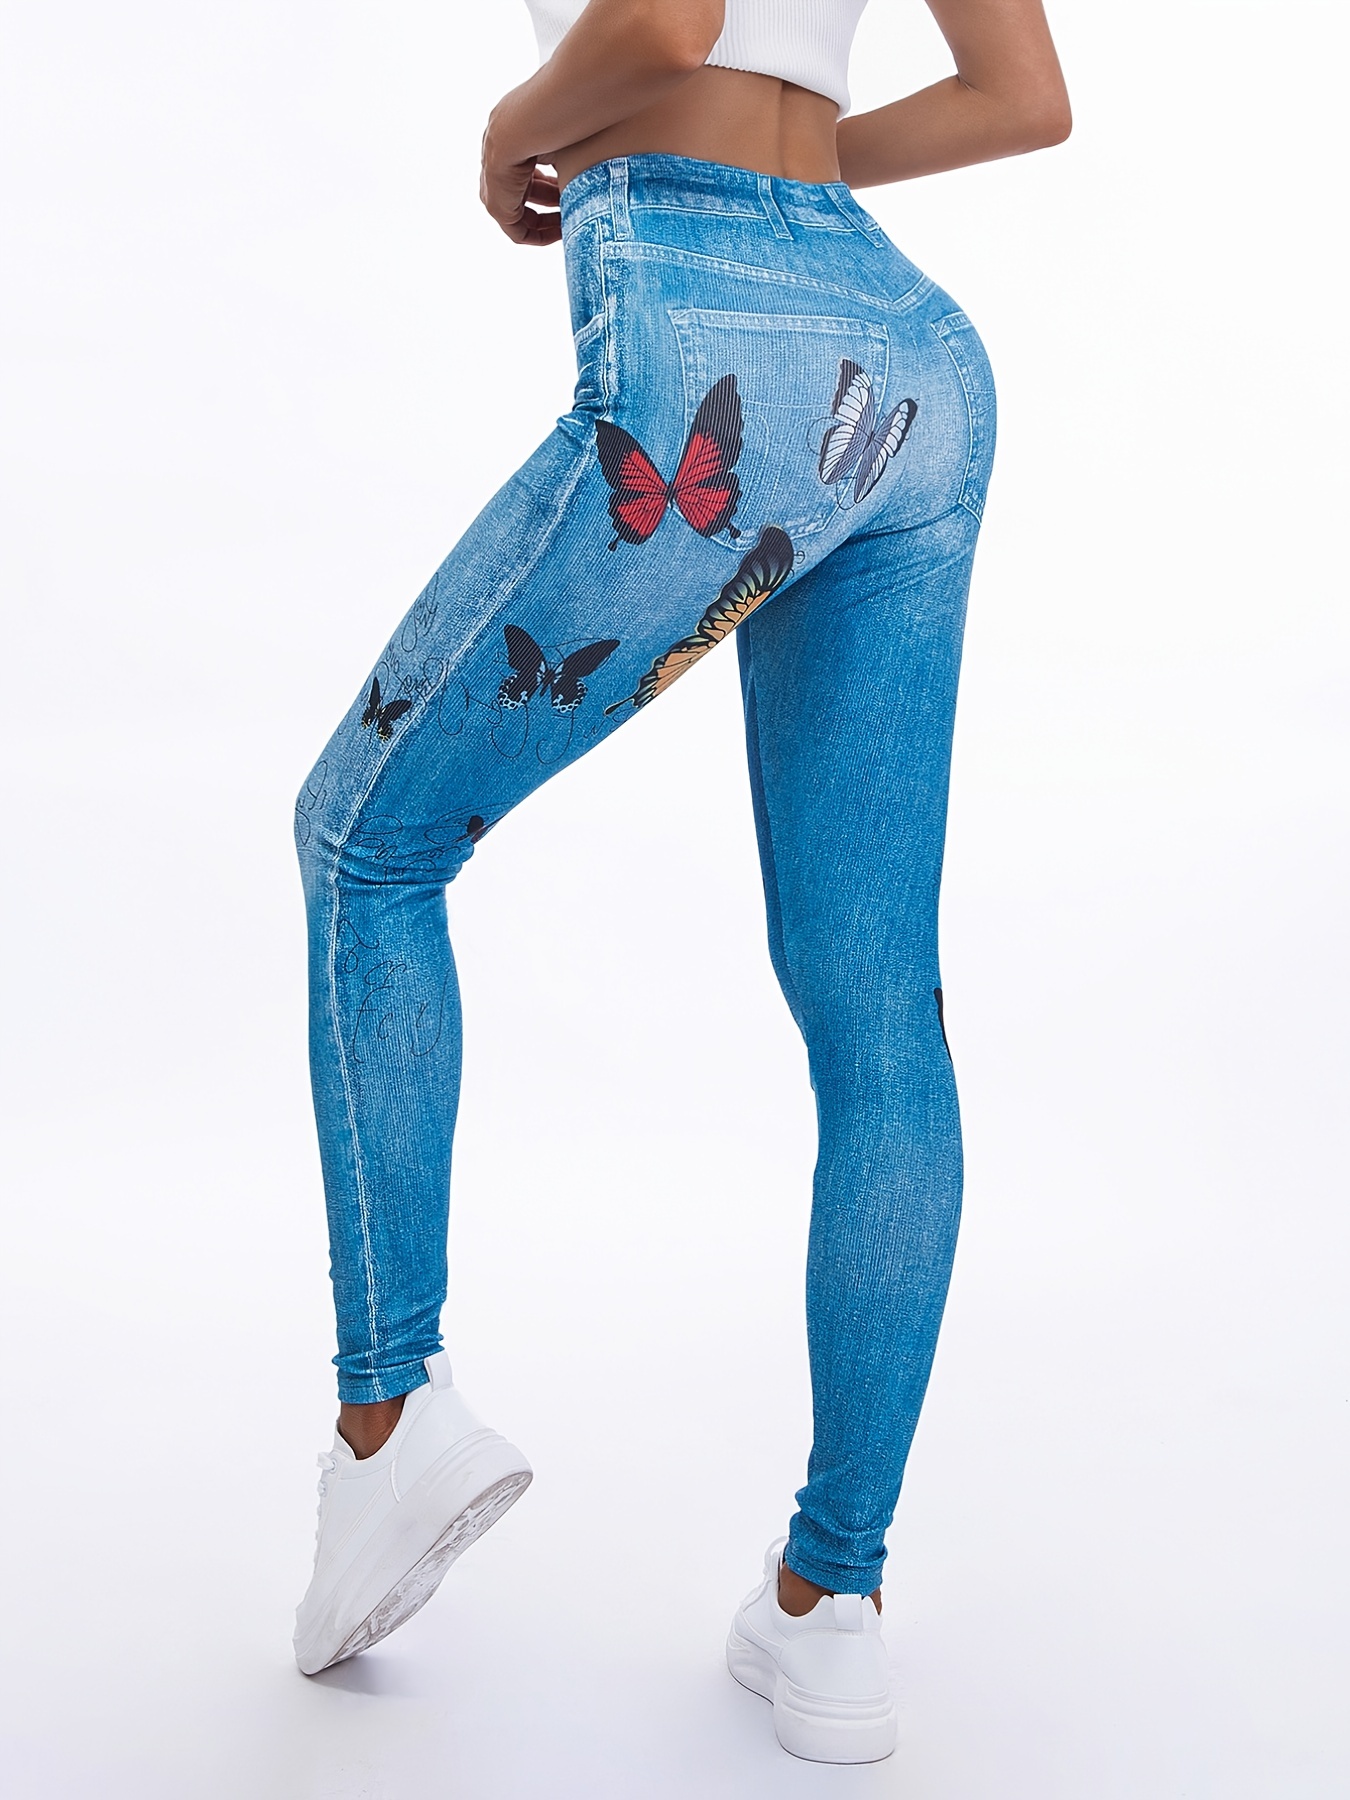 Gibobby Pantalones dama Leggings Floral personalizado Azul Pilates Mujer  Imprimir Pantalones colorid Gibobby